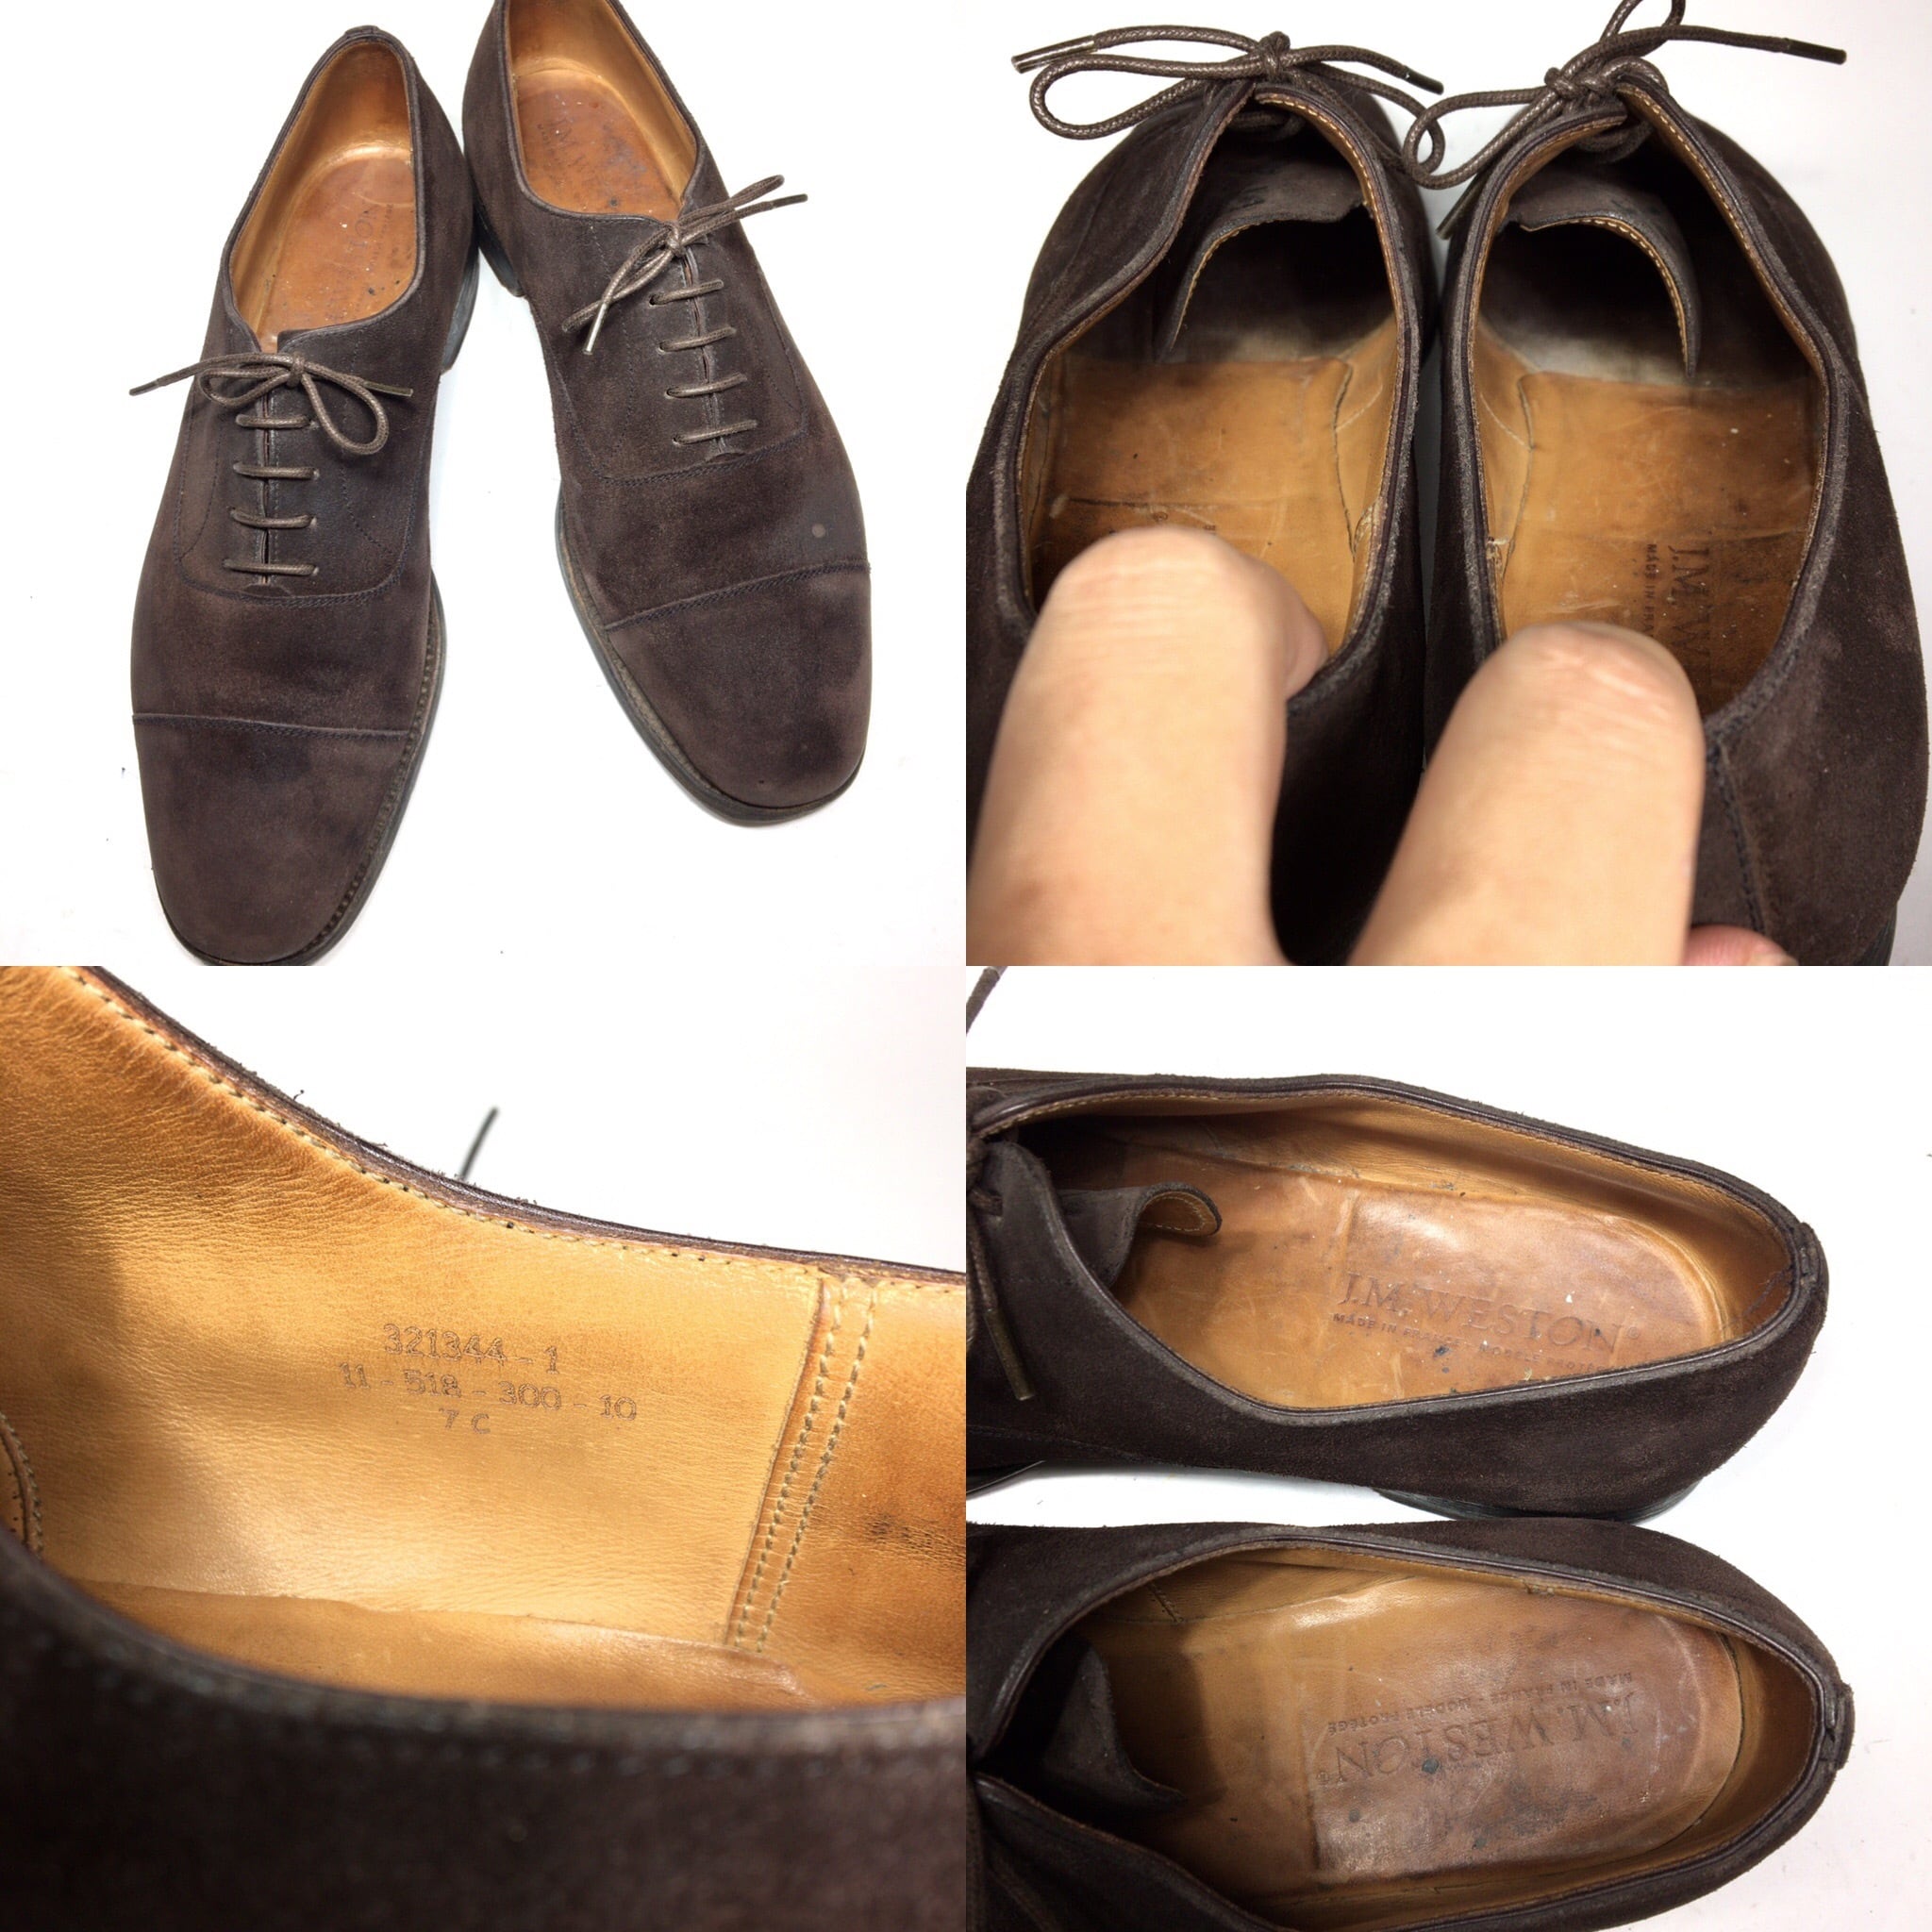 jmウェストン J.M.Weston 300 スエード ストレートチップ 25.5センチ | 中古靴・革靴・ブーツ通販専門店 DafsMart  ダフスマート Online Shop powered by BASE